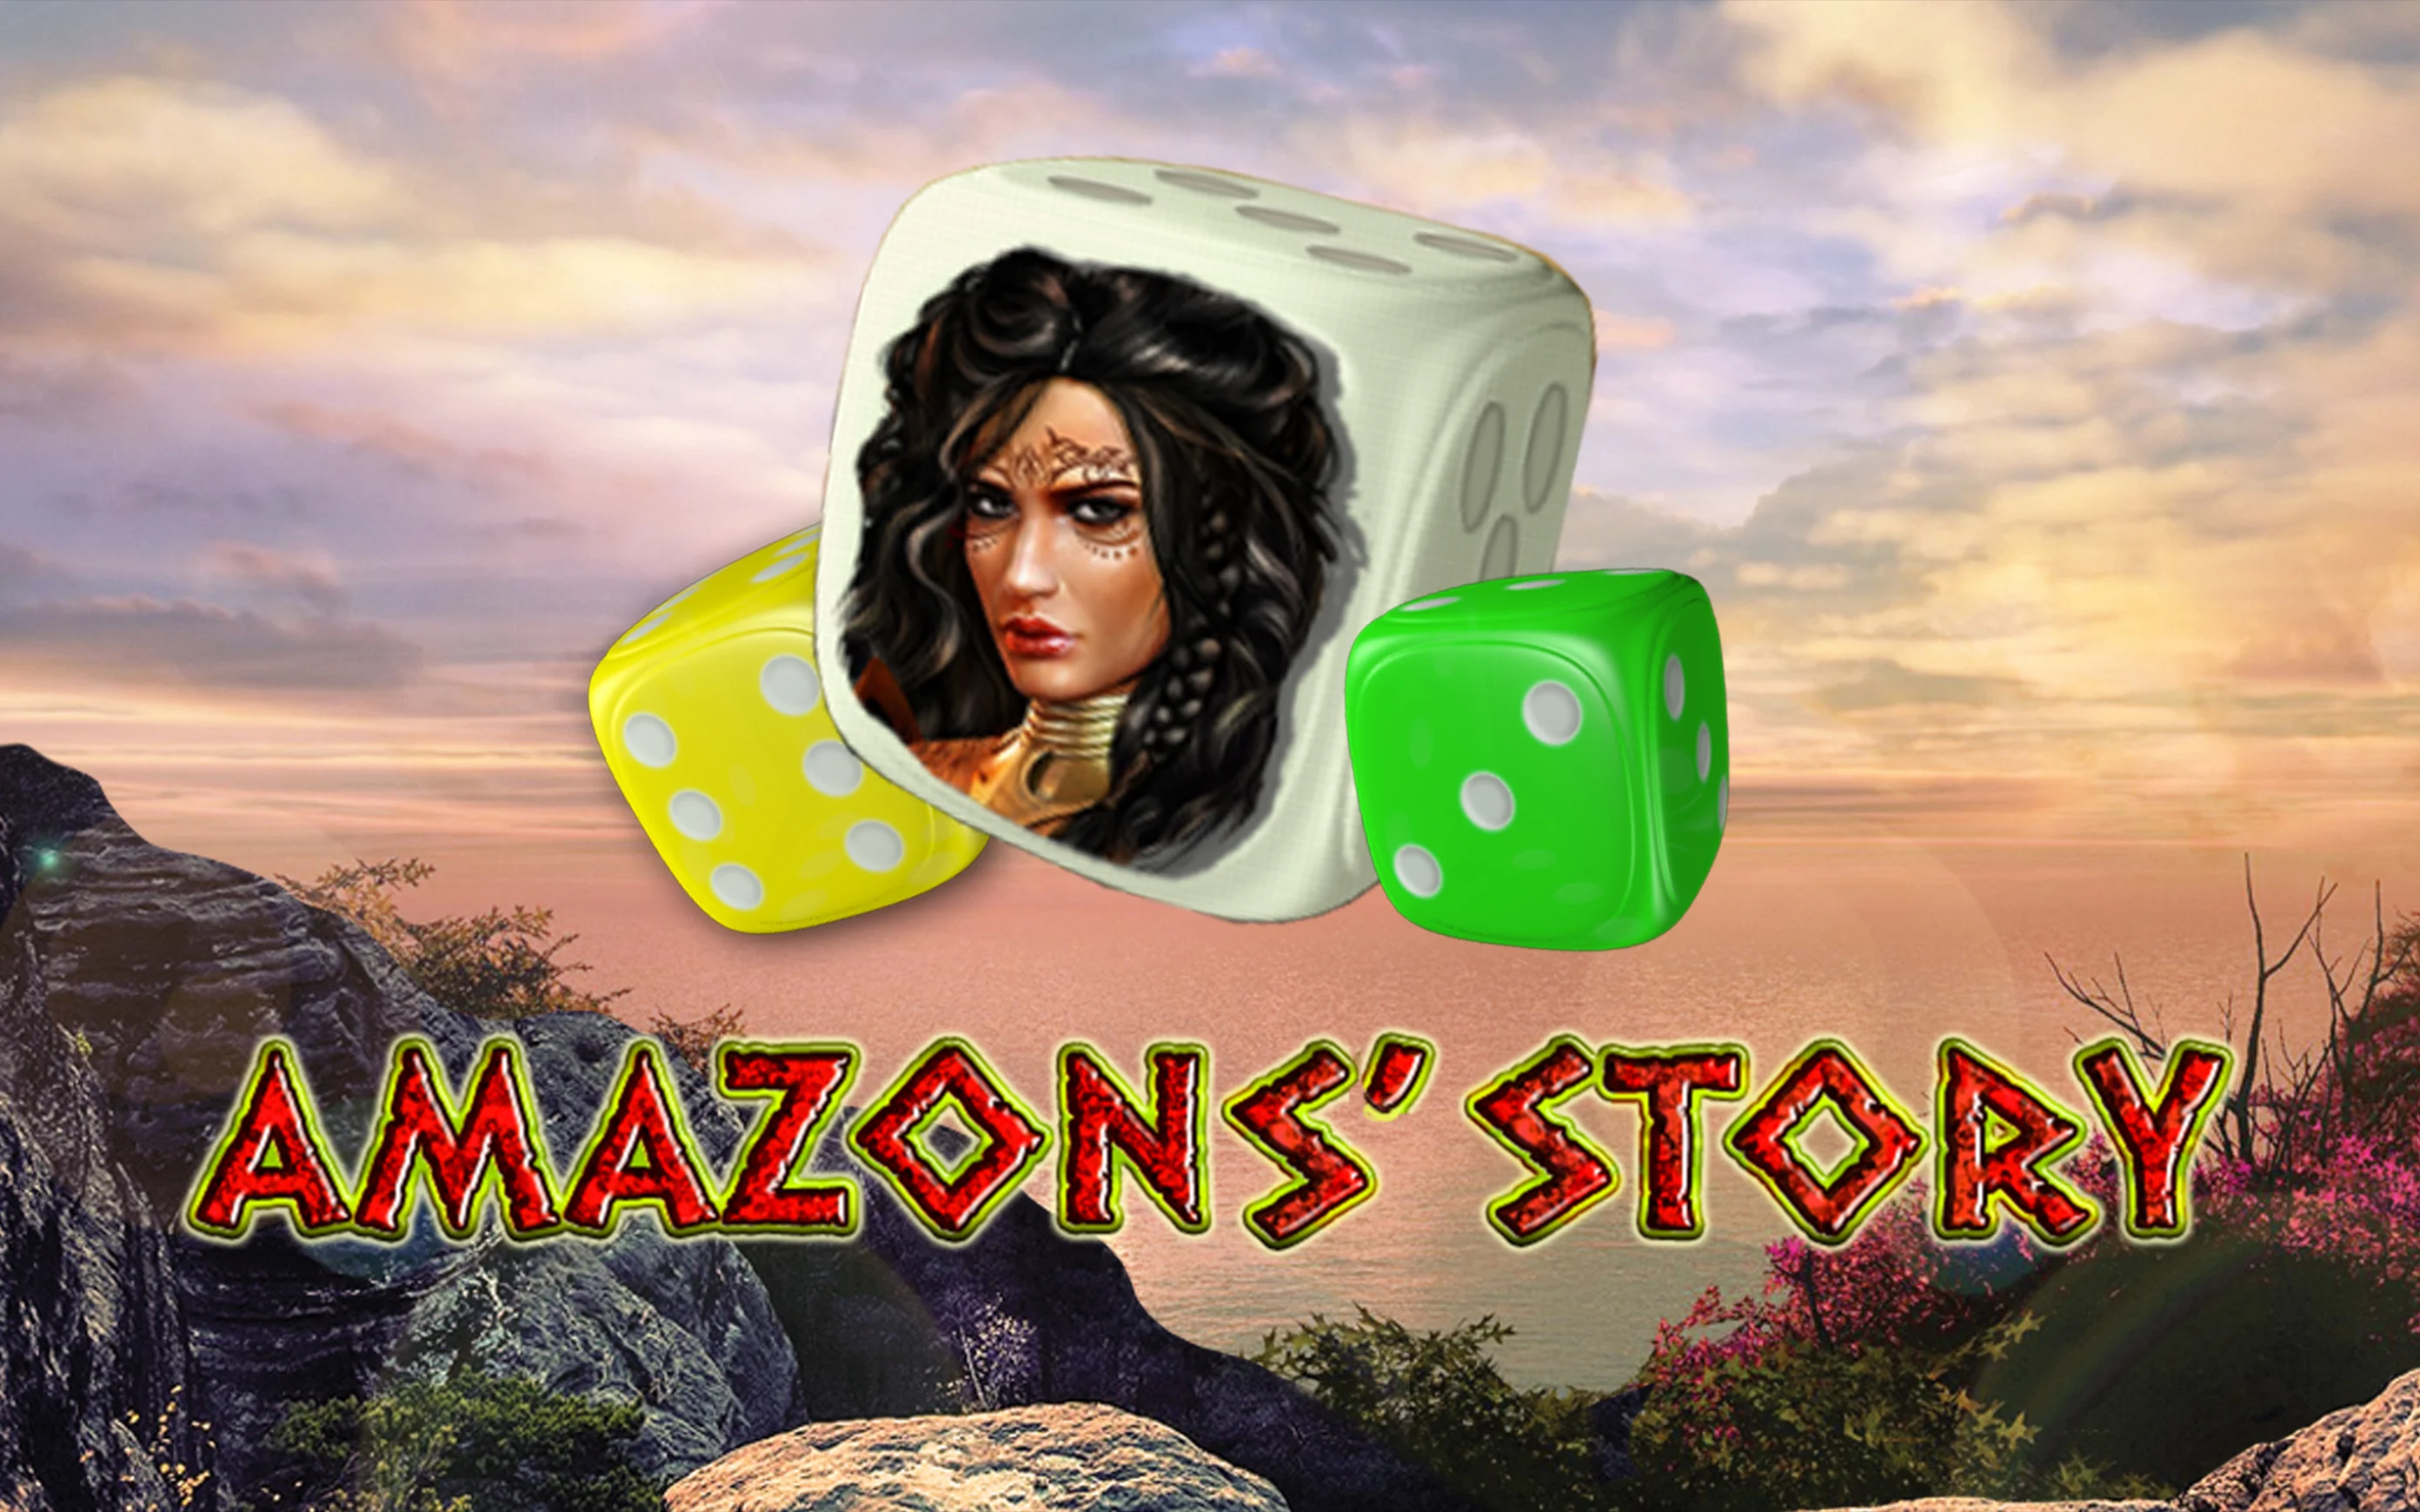 Play Amazons' Story on Starcasino.be online casino